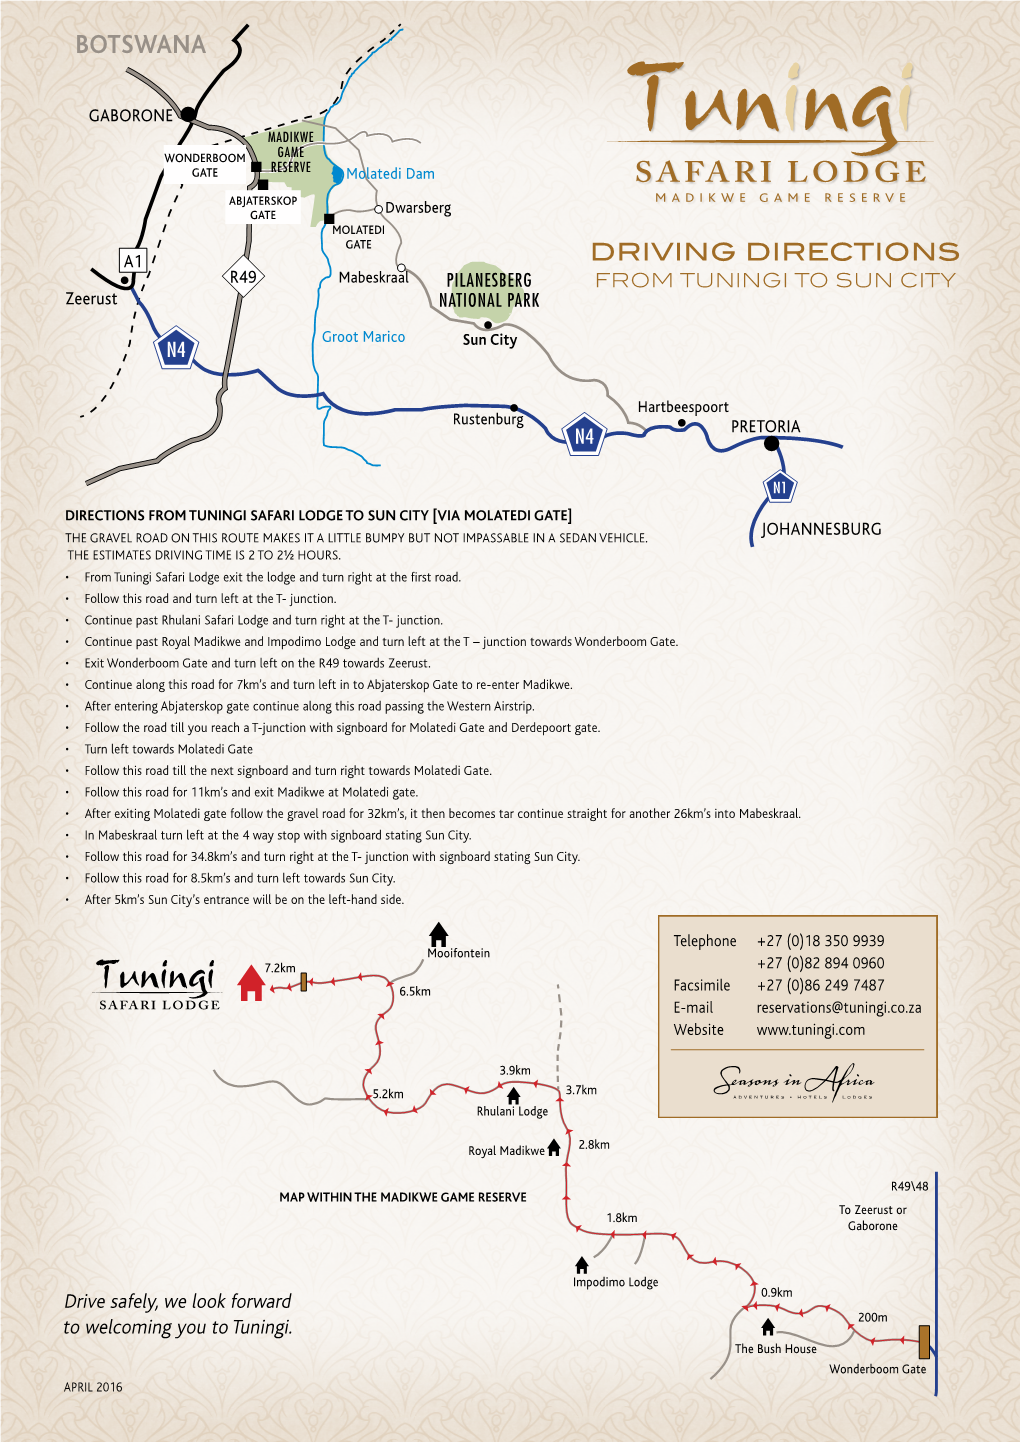 Directions from Tuningi to Sun City